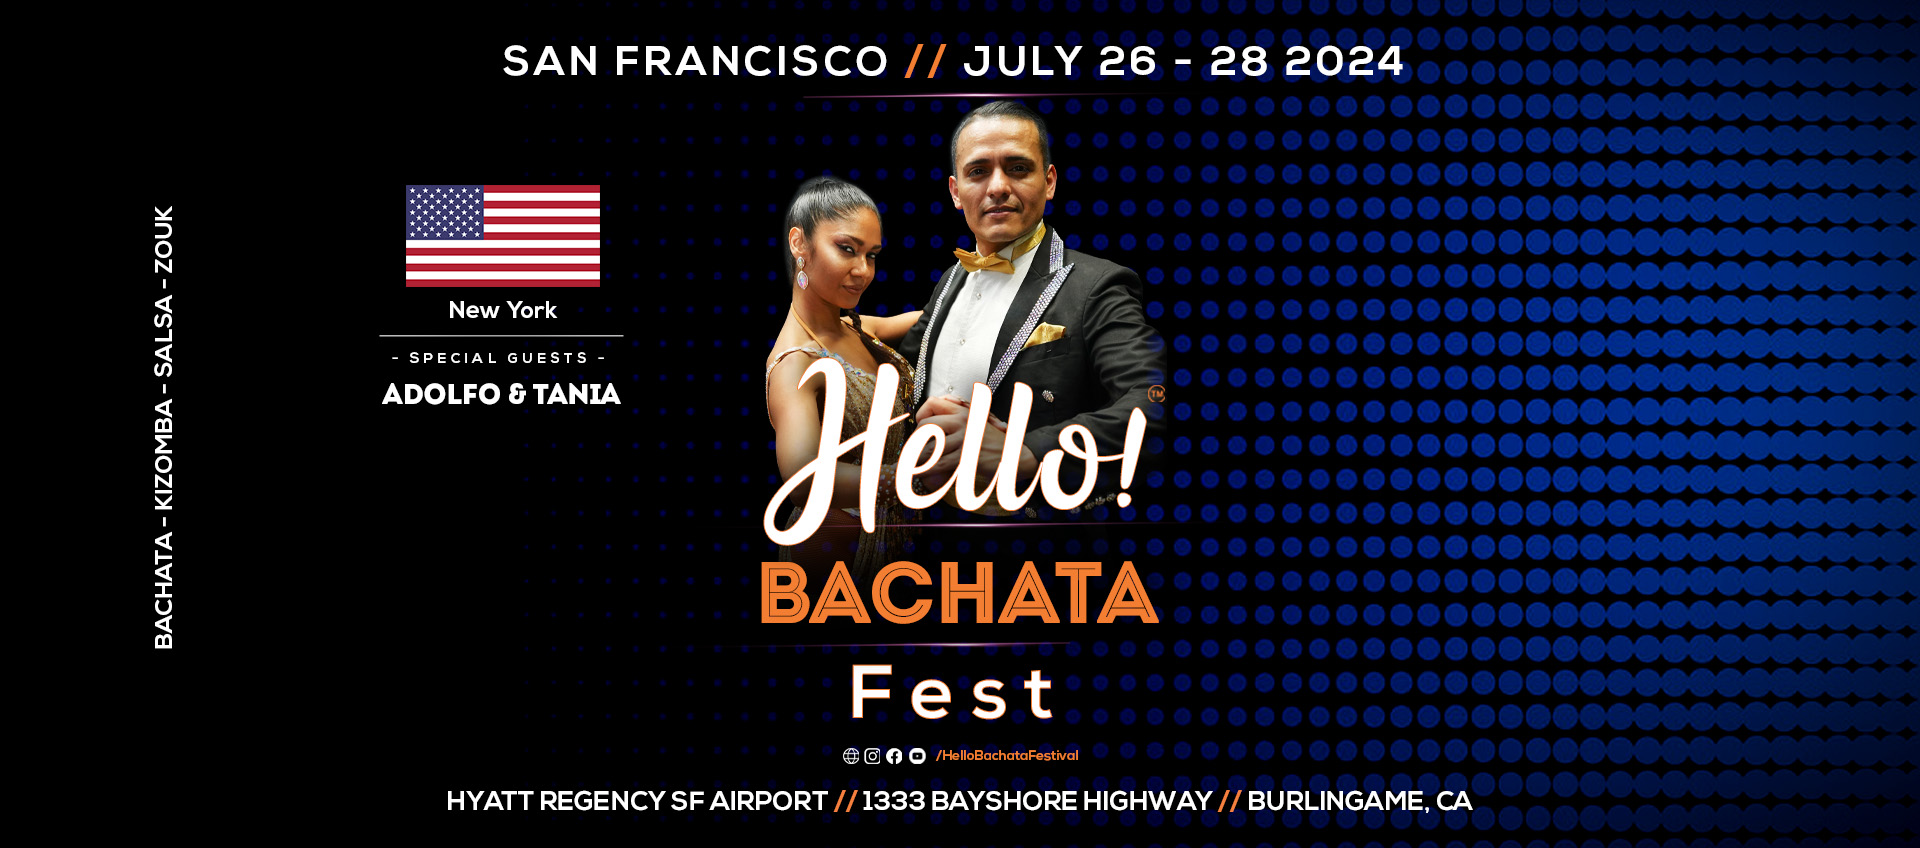 Hello! Bachata Fest - Adolfo & Tania - Salsa Mambo - New York